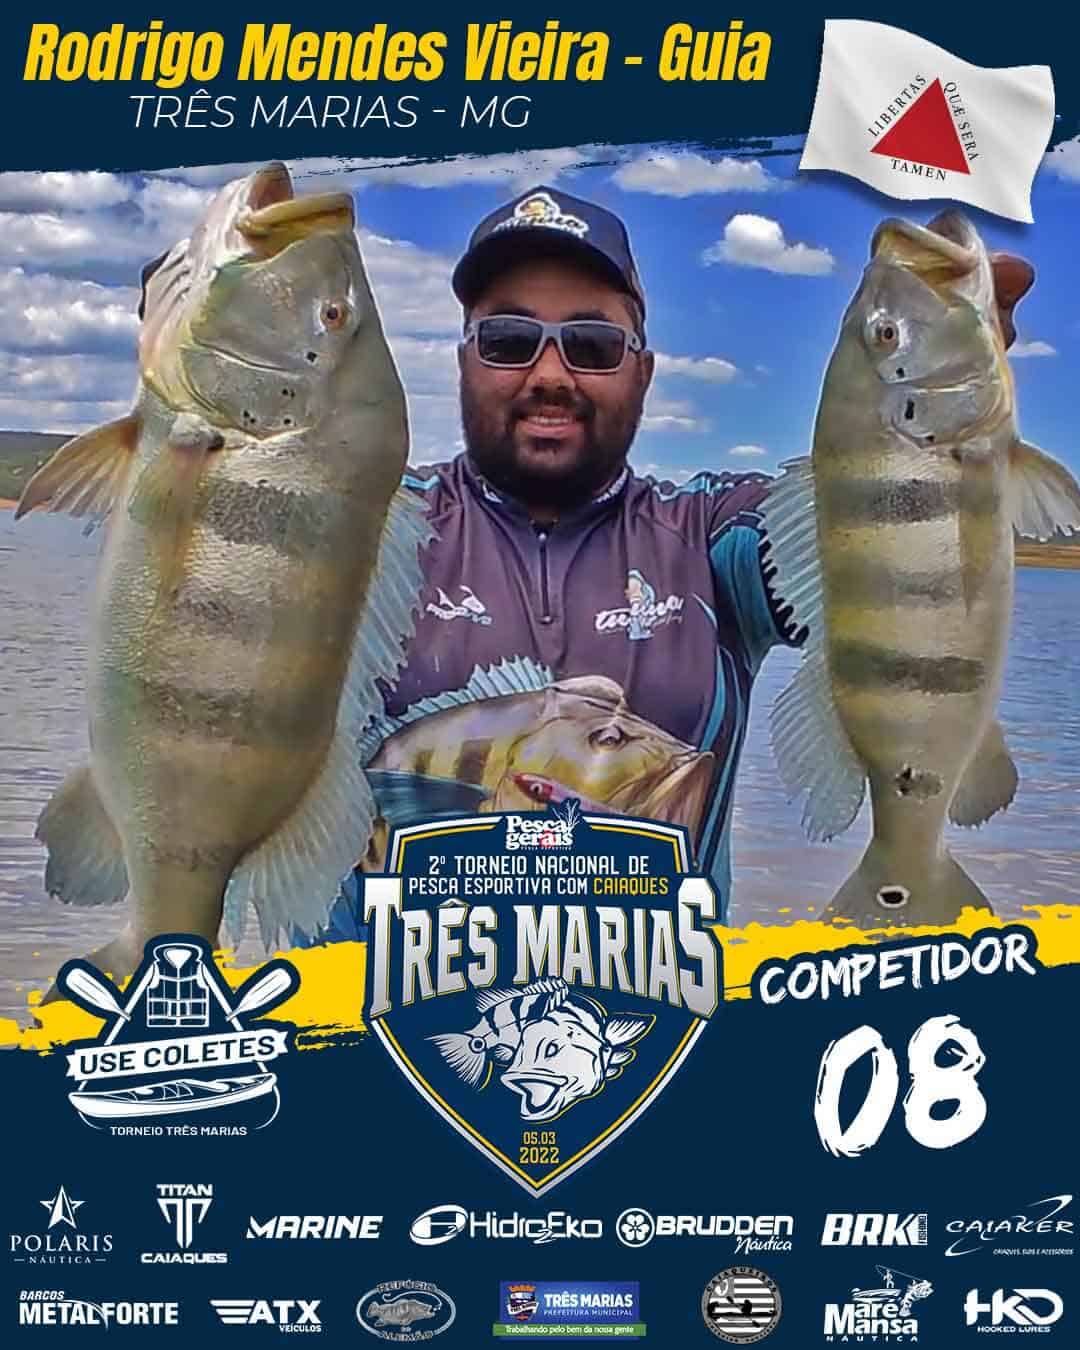 Rodrido Mendes Vieira Guia Tucuna Sport Fishing